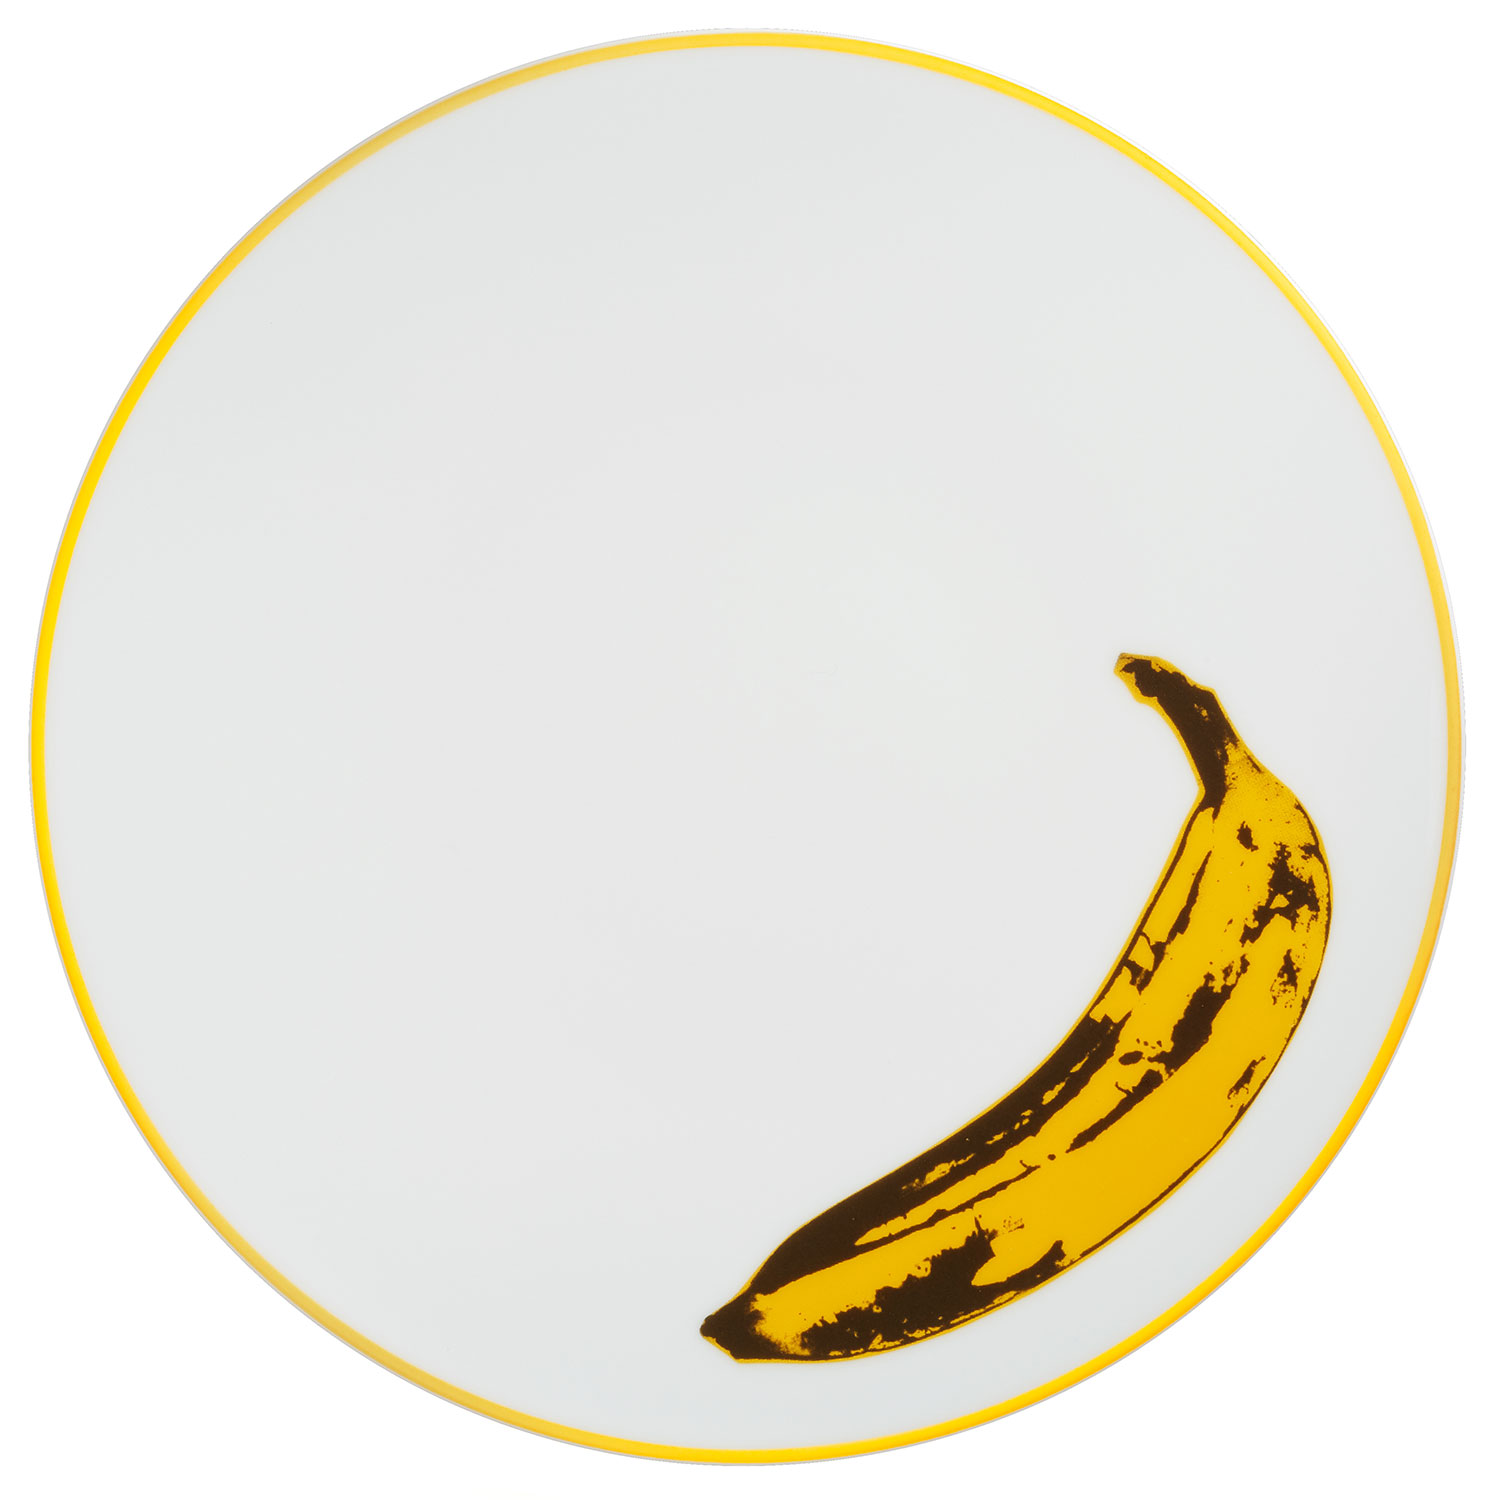 Porzellanteller "Banana" von Andy Warhol